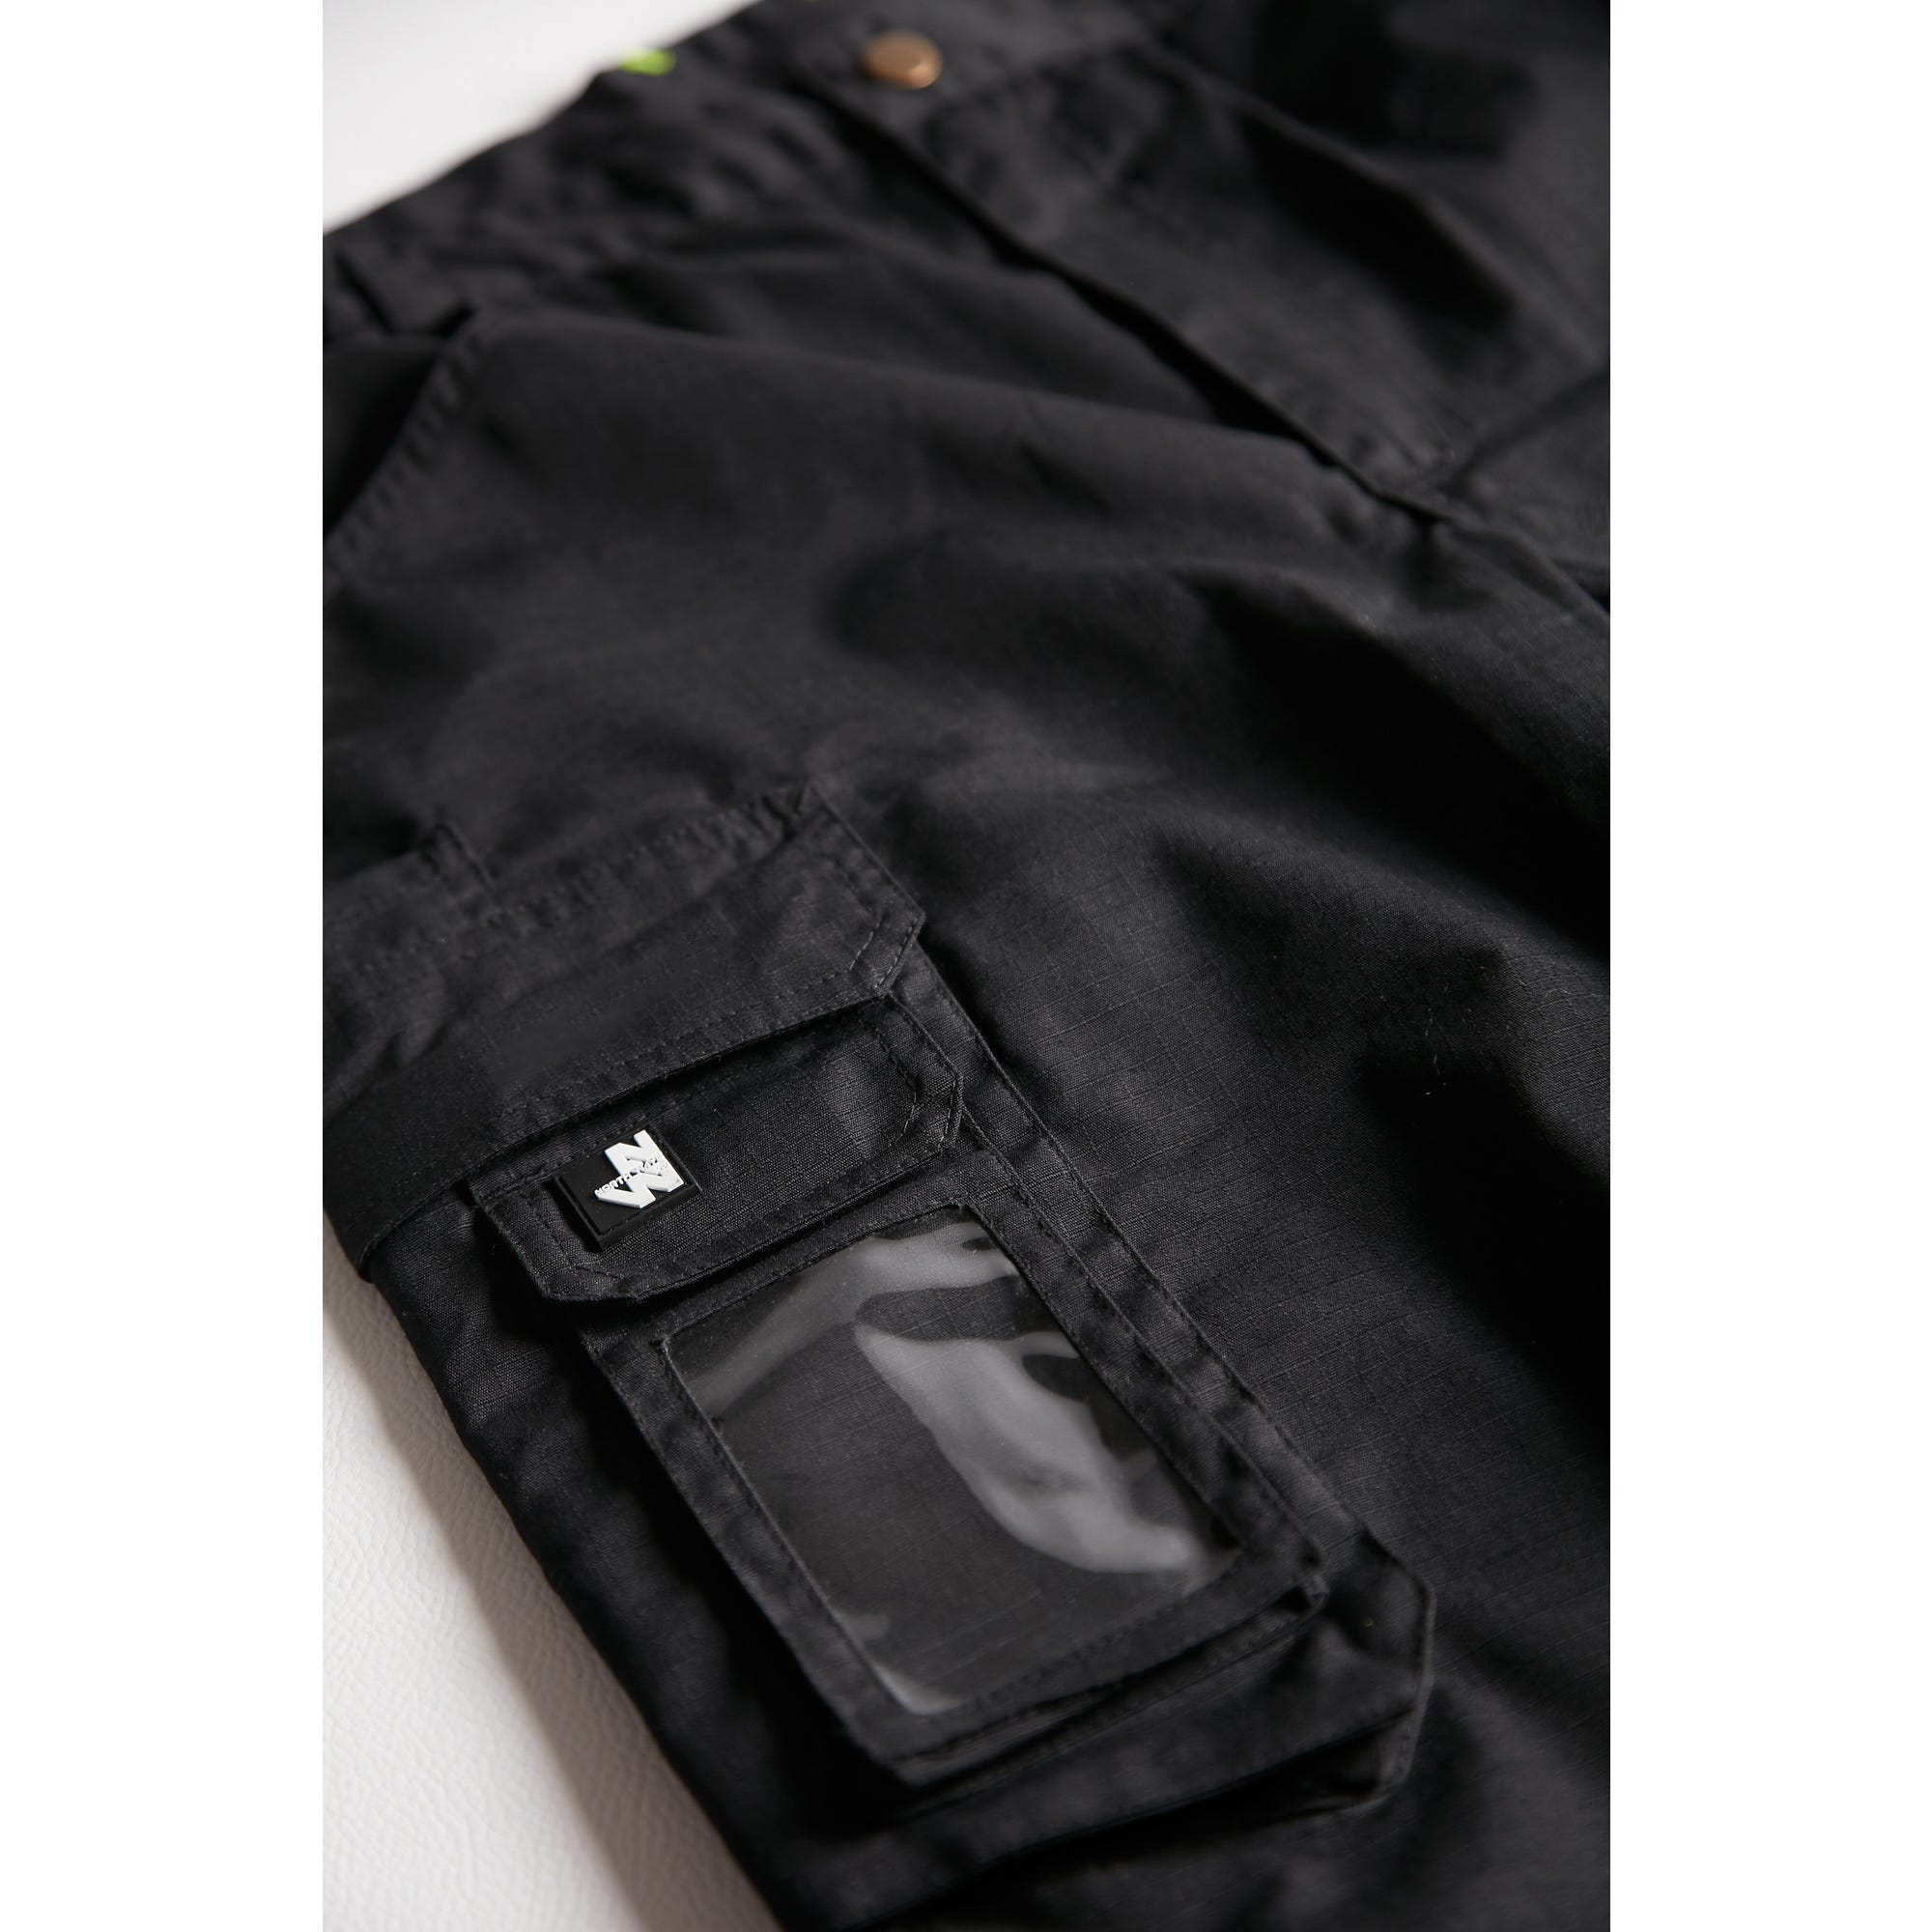 Pantalon de travail noir T.48 EDWARD - NORTH WAYS 6